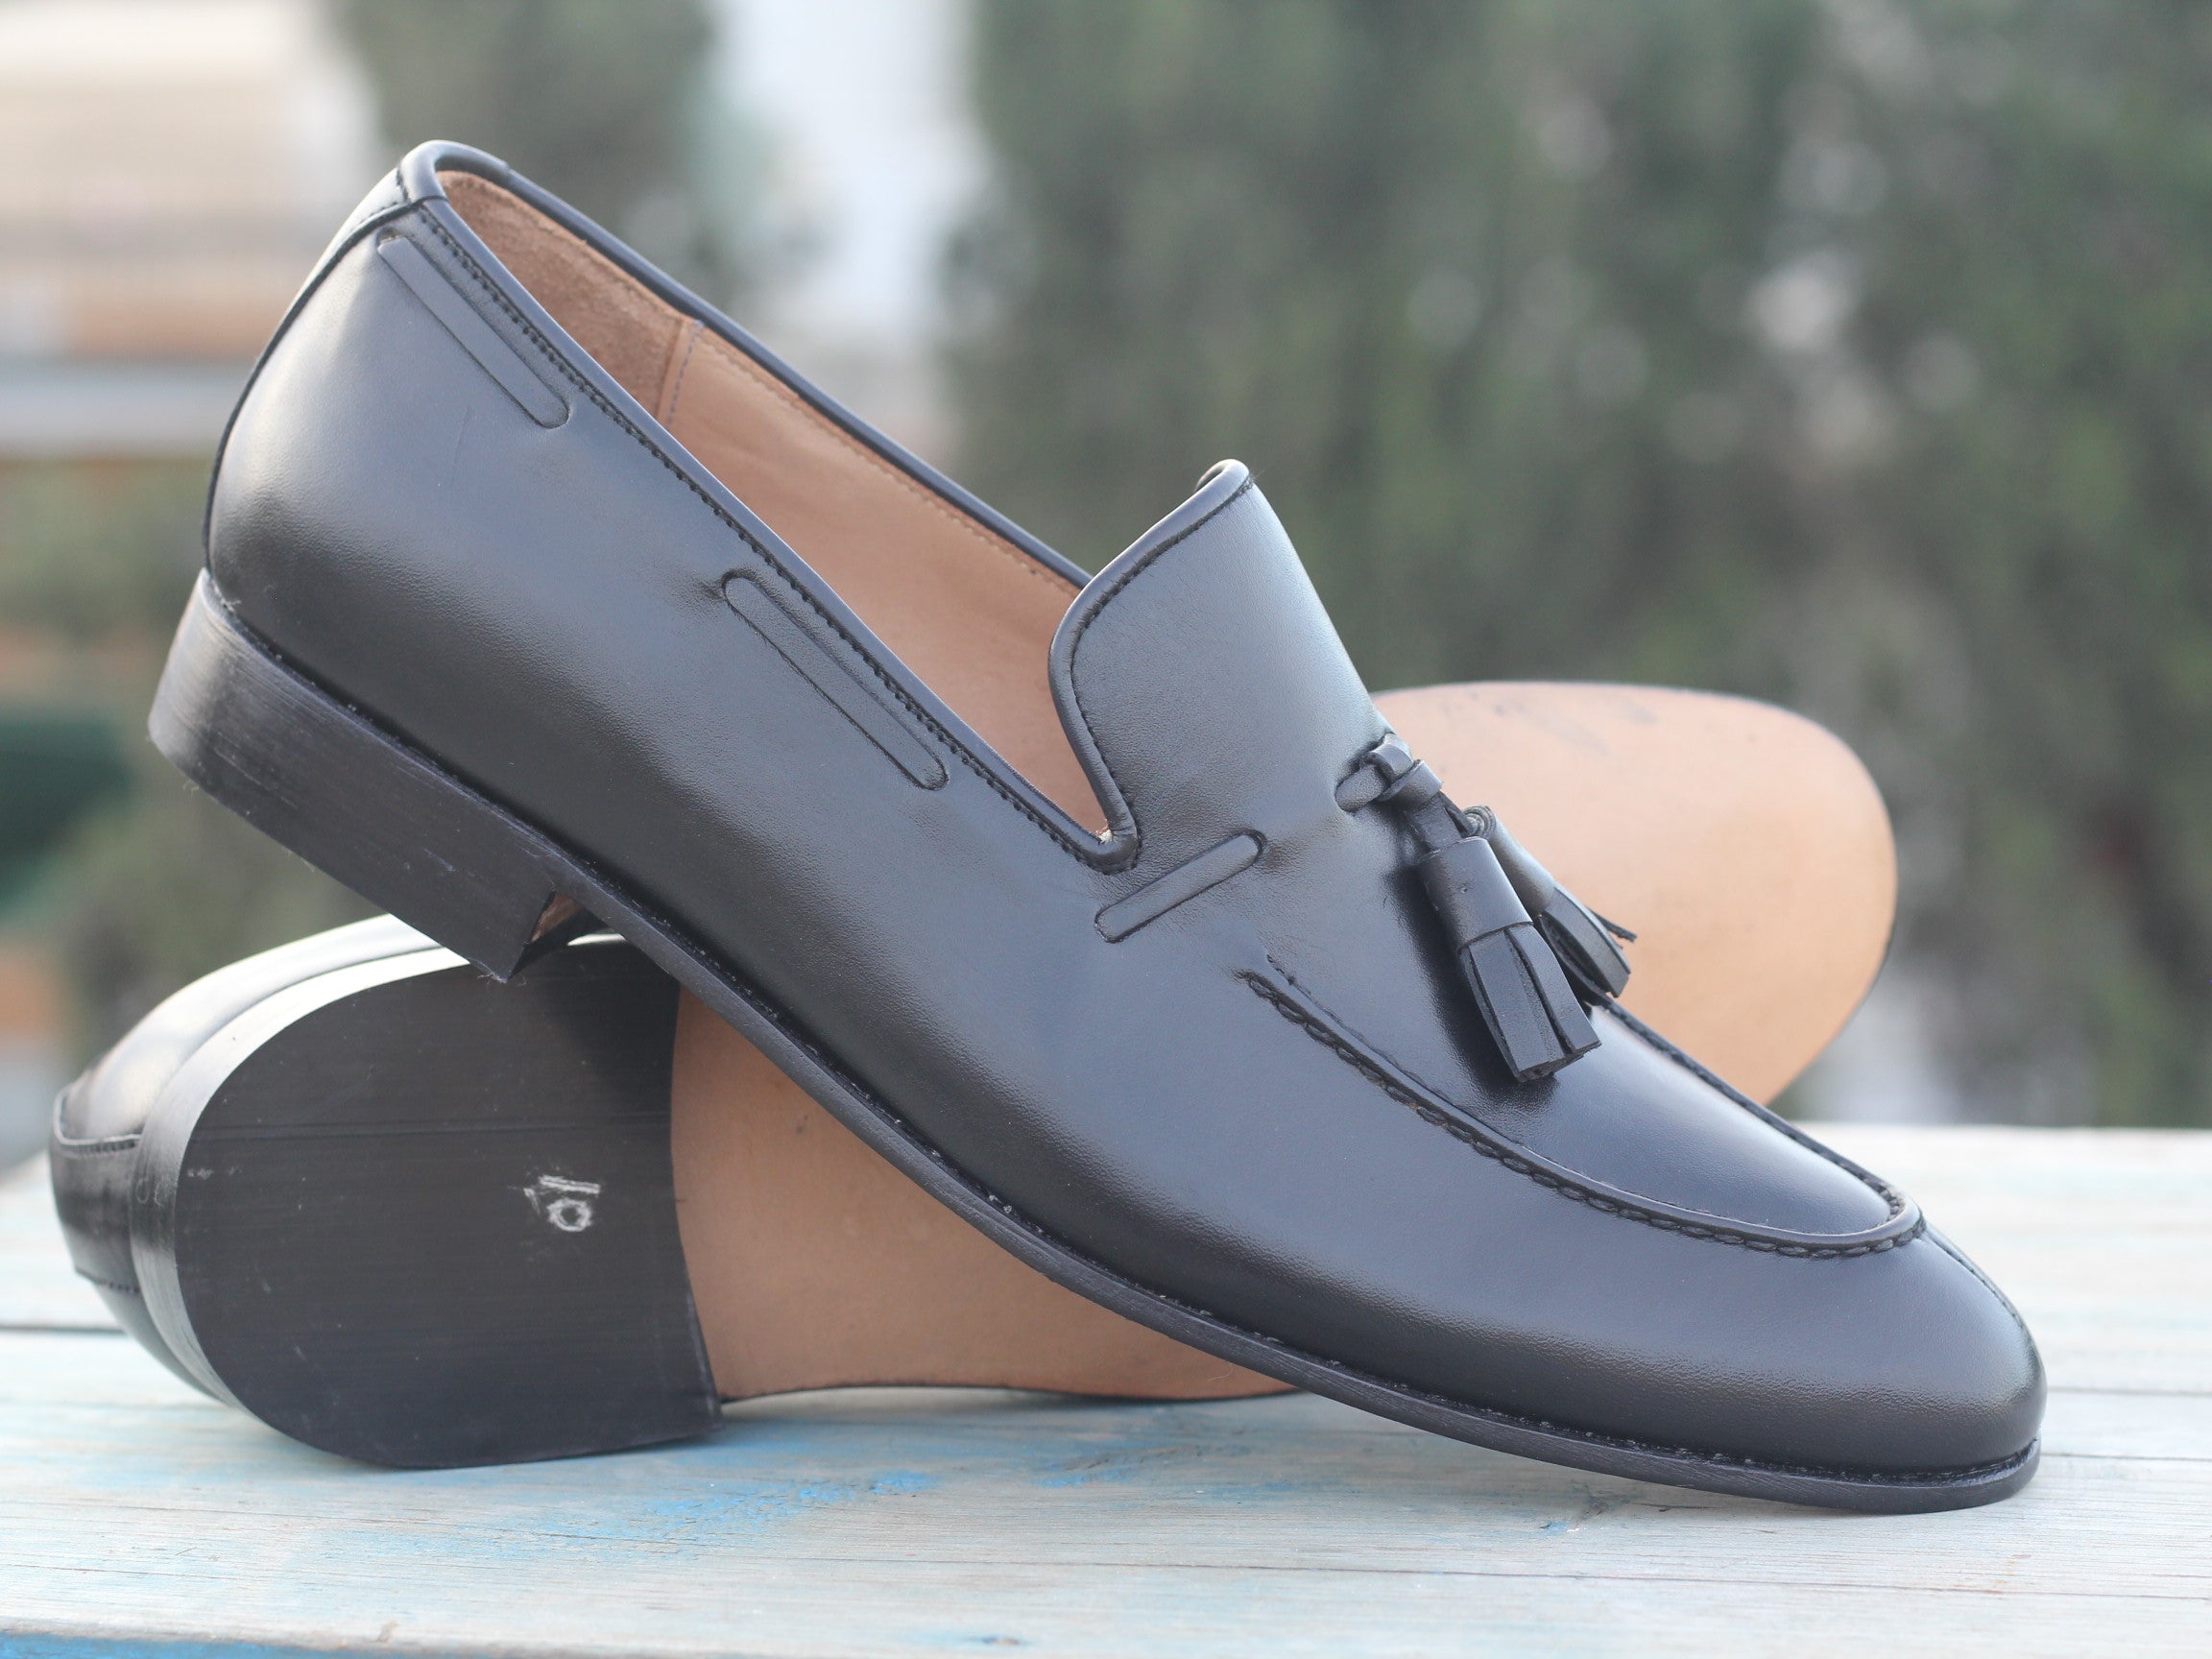 Men's Handmade Formal Shoes Tassels Black Calf Leather Elegant Formal  Dress Shoe